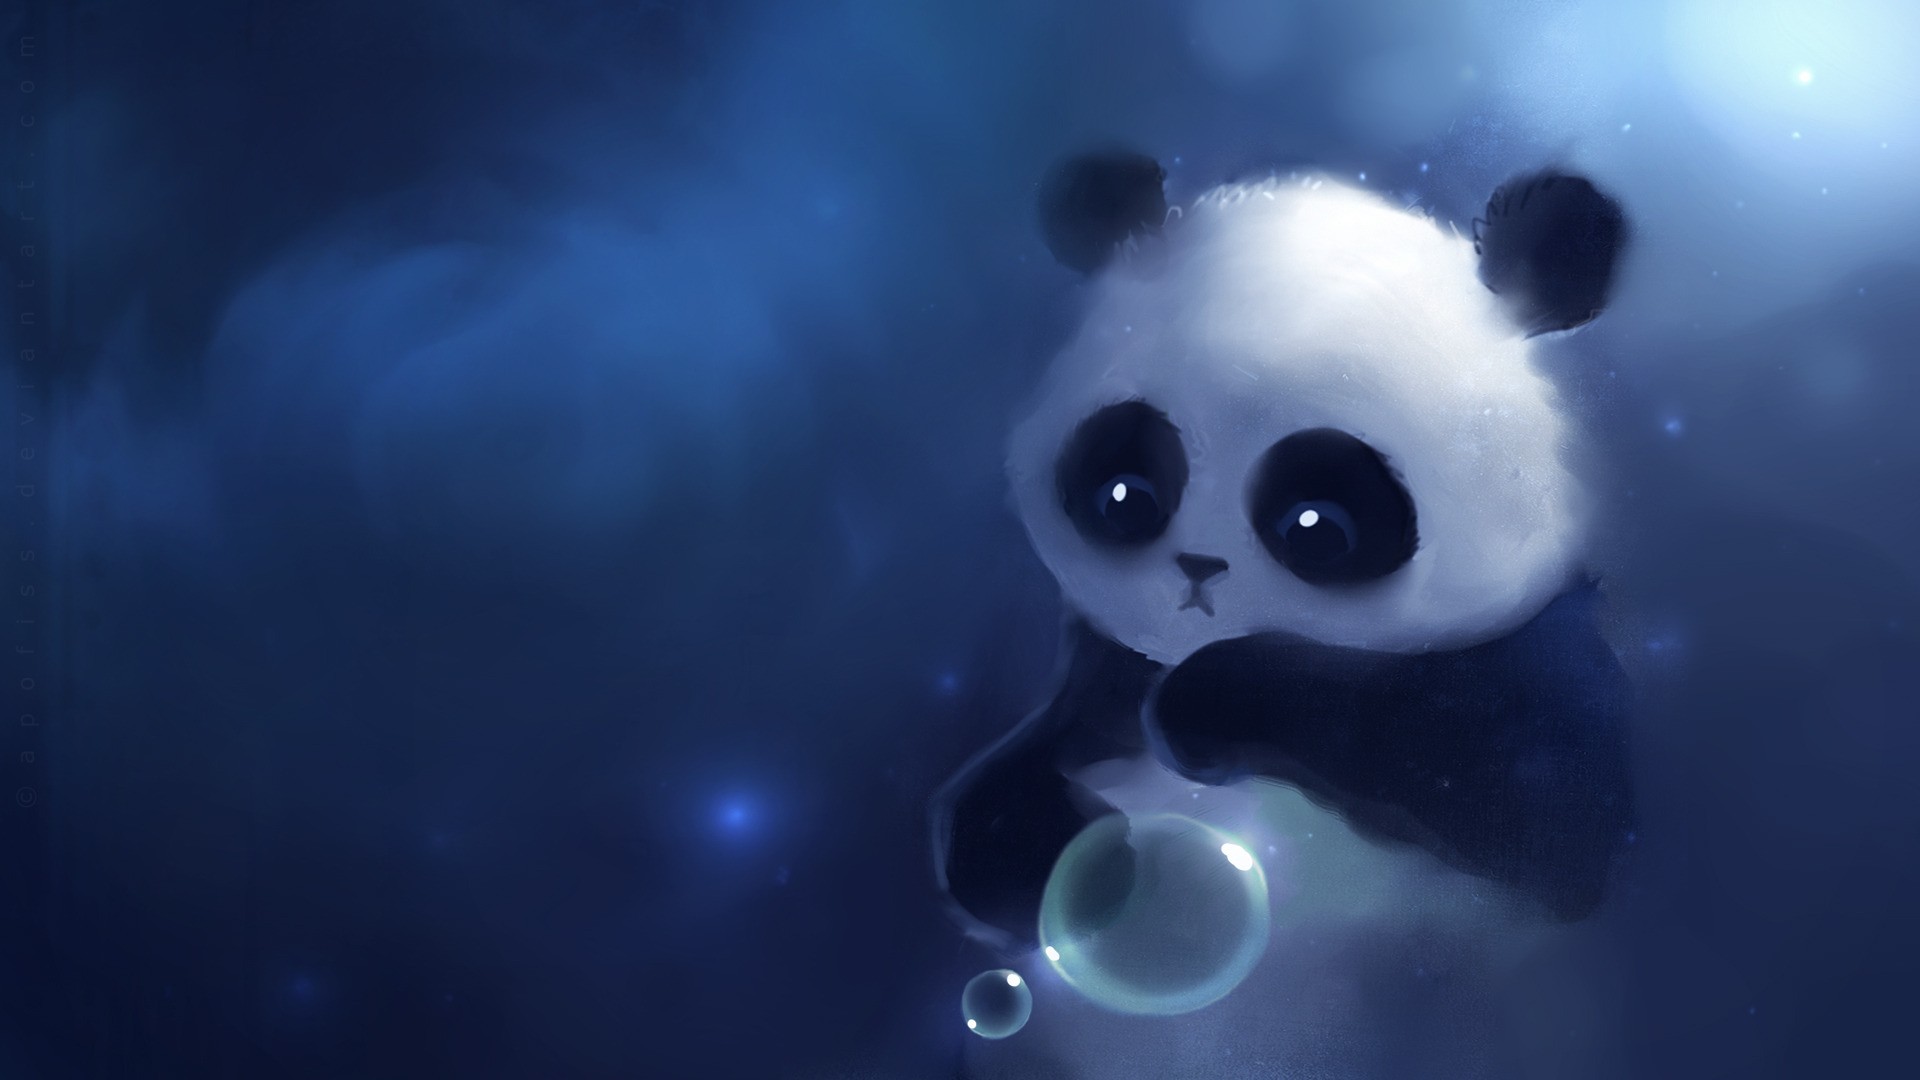 Descarga gratuita de fondo de pantalla para móvil de Animales, Panda.